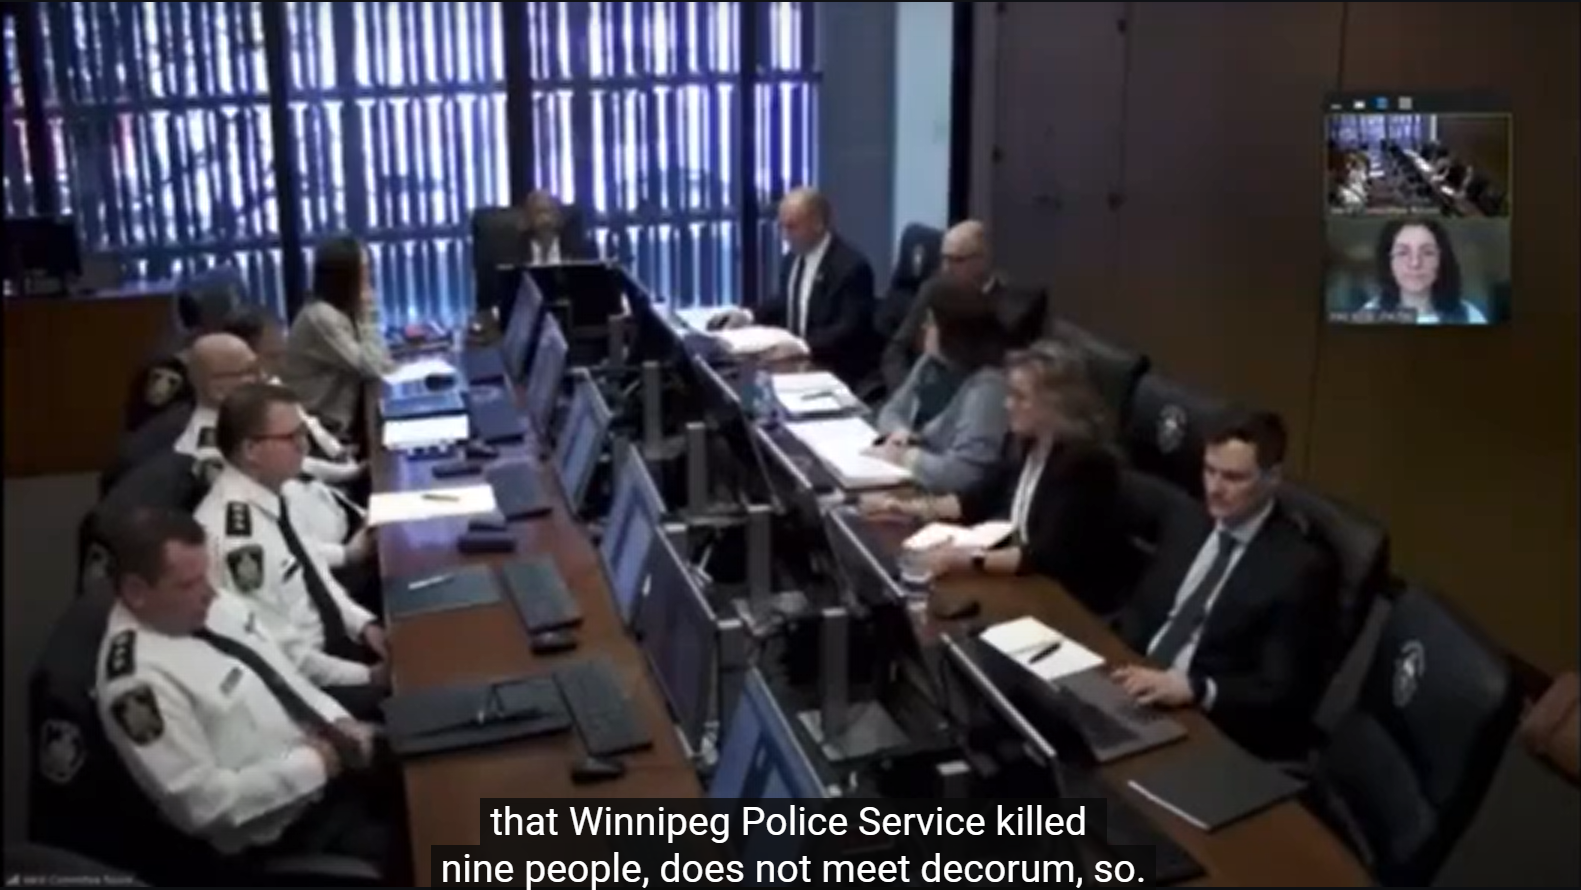 Screenshot of Winnipeg Police Board meeting. The caption reads "the WPS killed nine people, does not meet decorum"